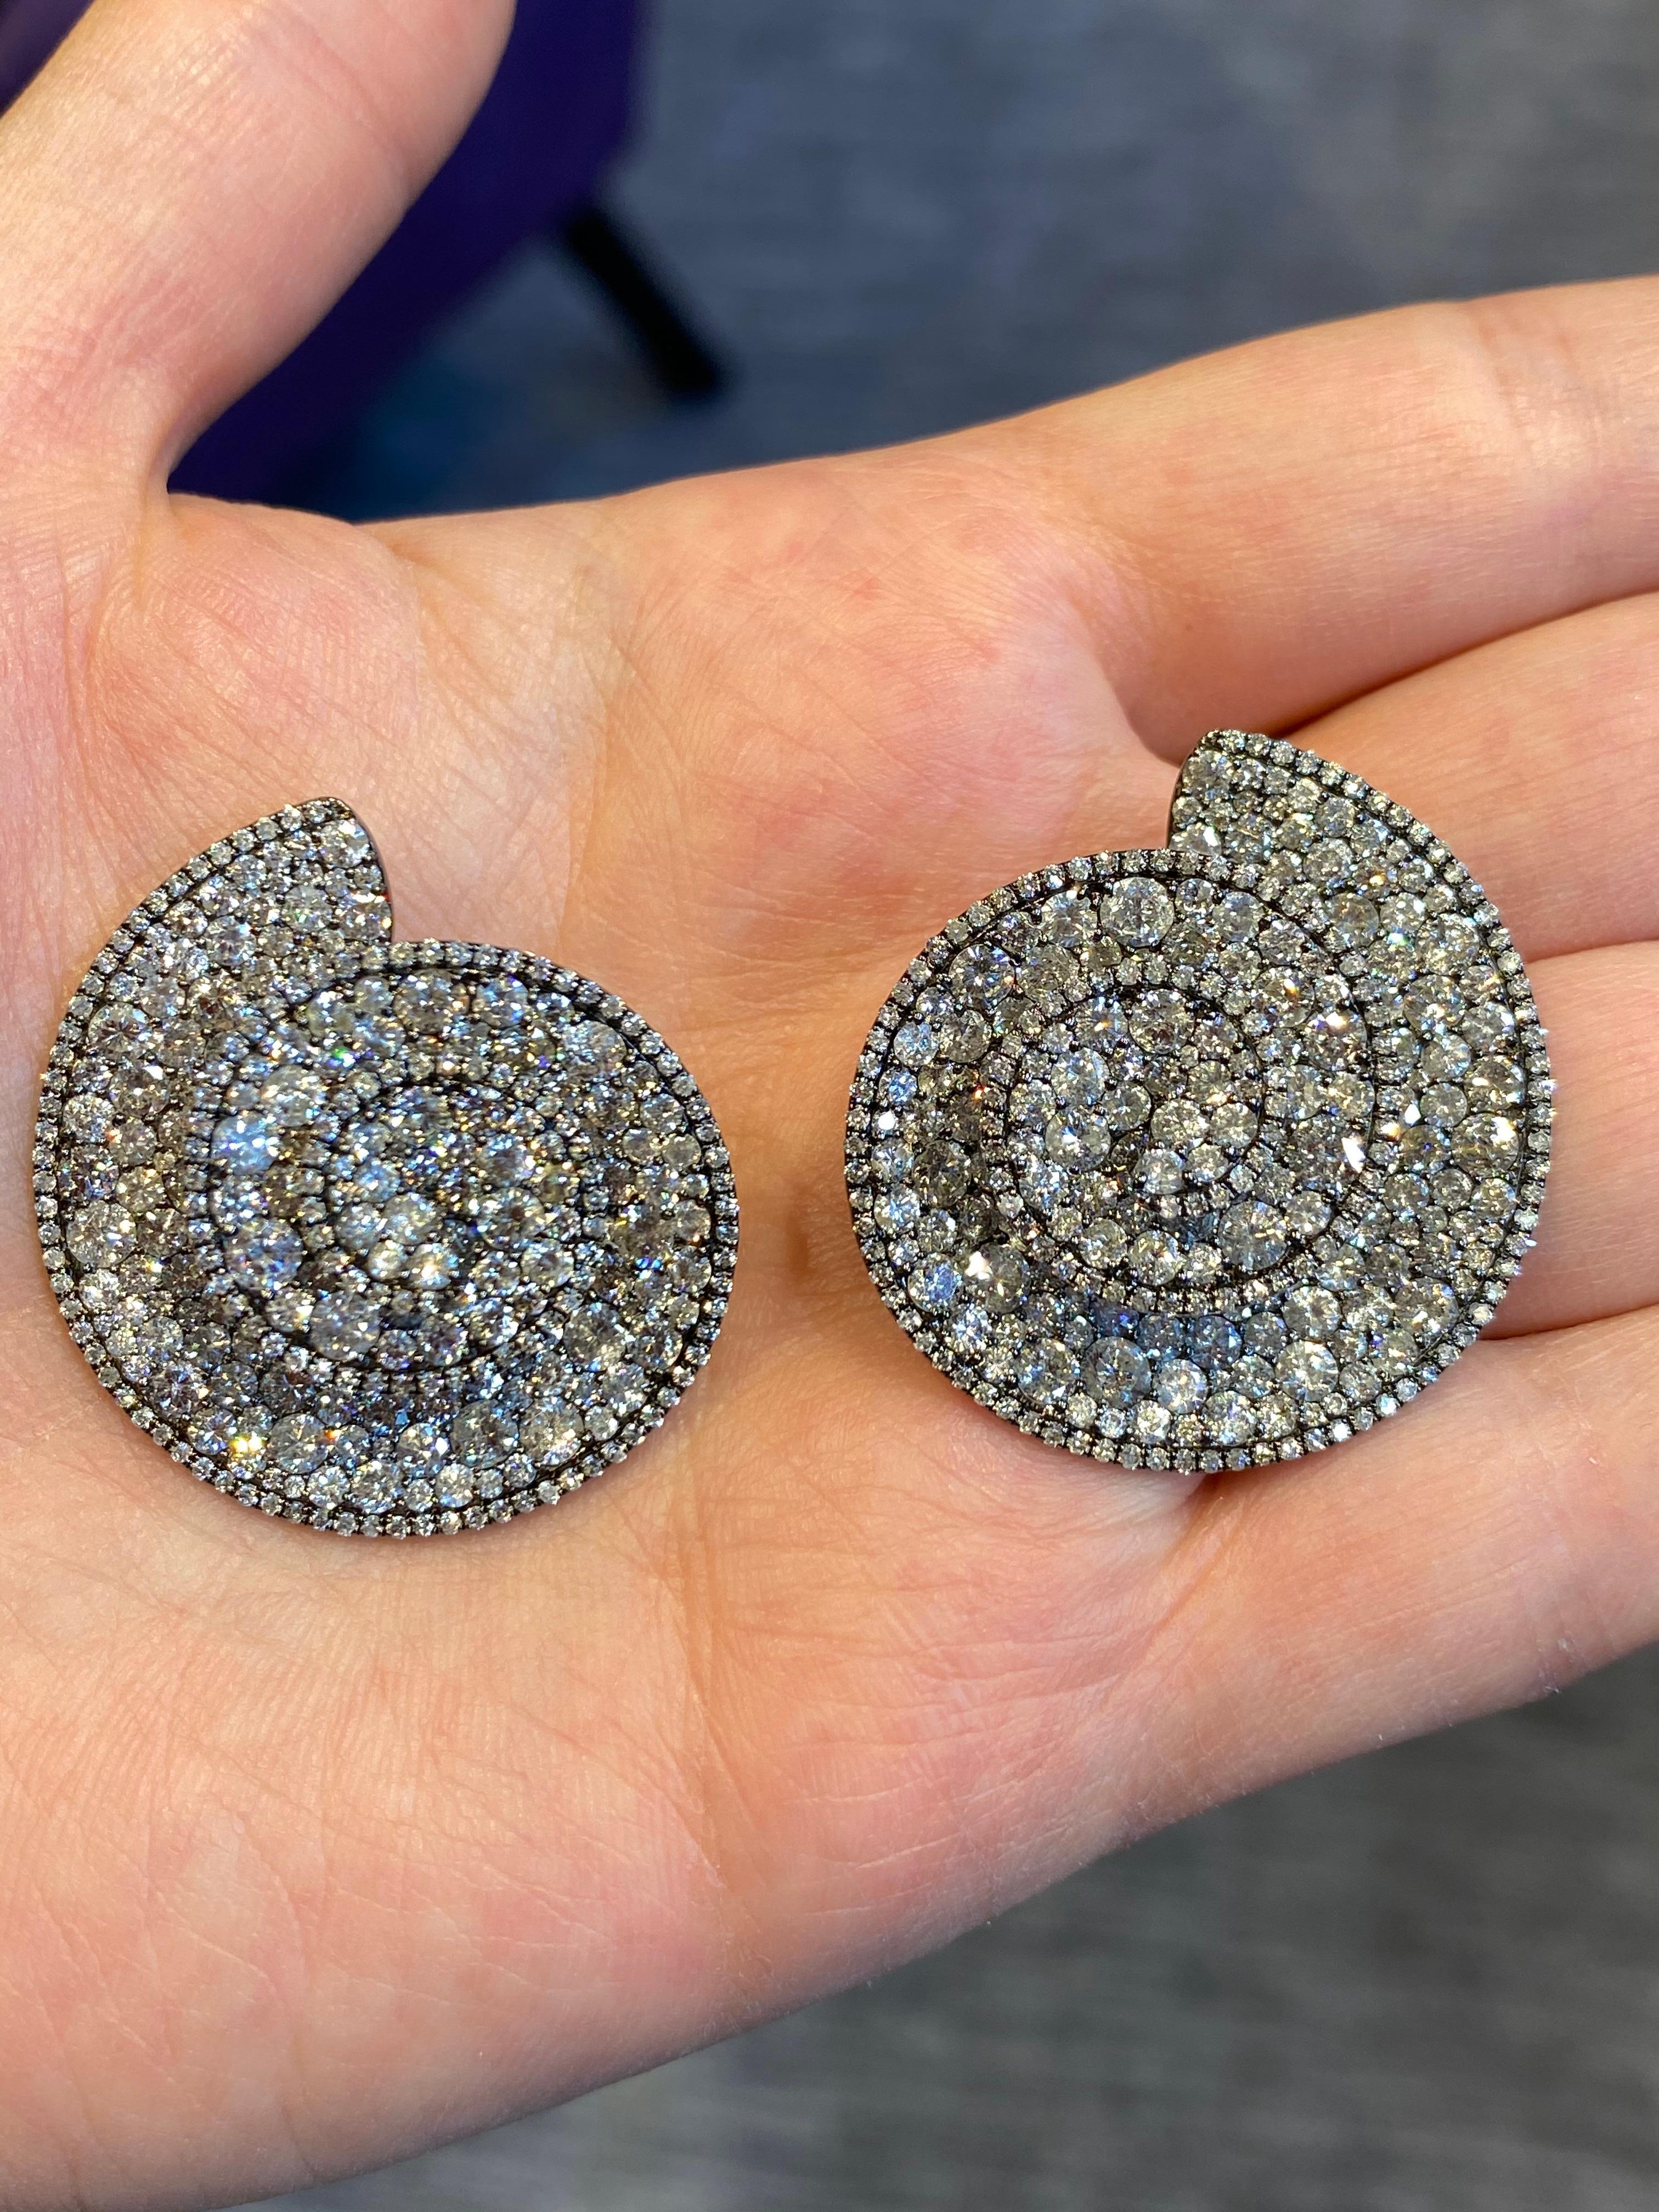 Diamond Swirl Earrings
Diamond Weight: Approximately 15.31 Cts 
Back Type: Push Back 
Measurements: 1.25